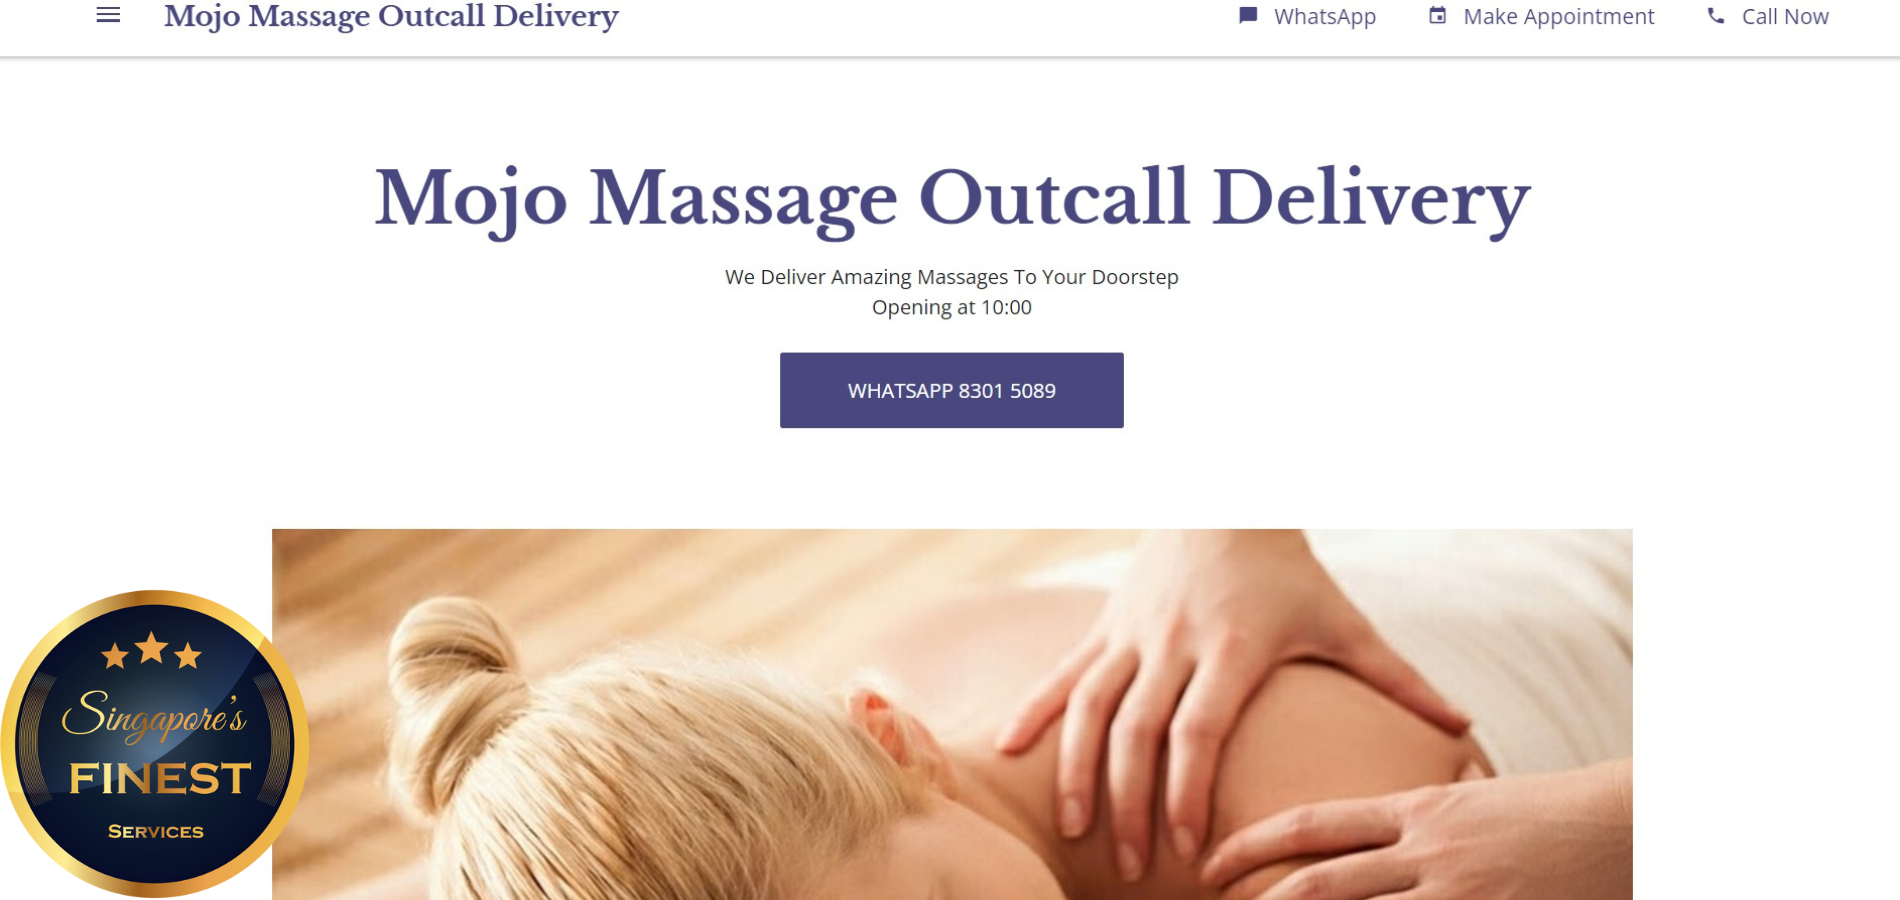 Mojo Massage Outcall Delivery - Home Massage Singapore